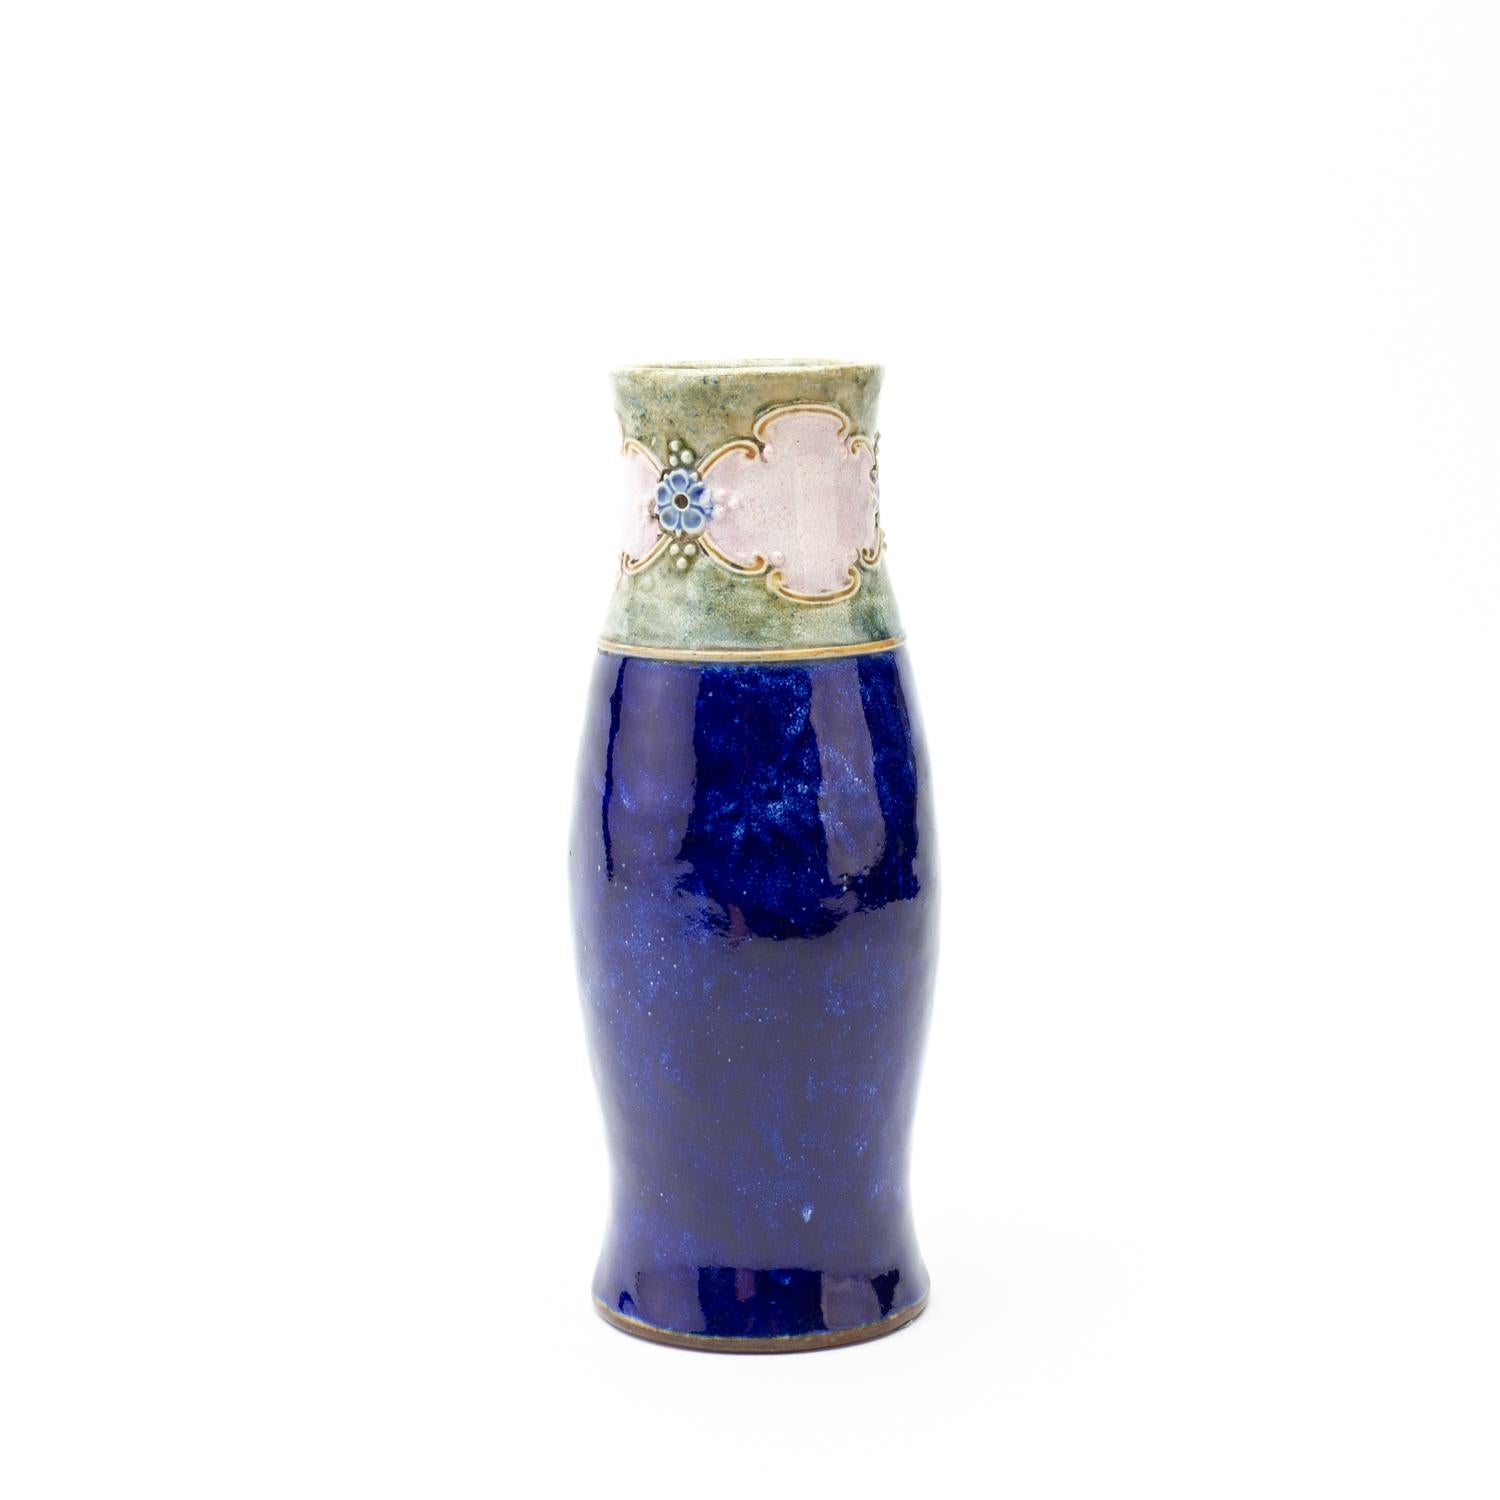 Doulton Lambeth Stoneware Vase 19th Century
Good condition
Free international shipping.